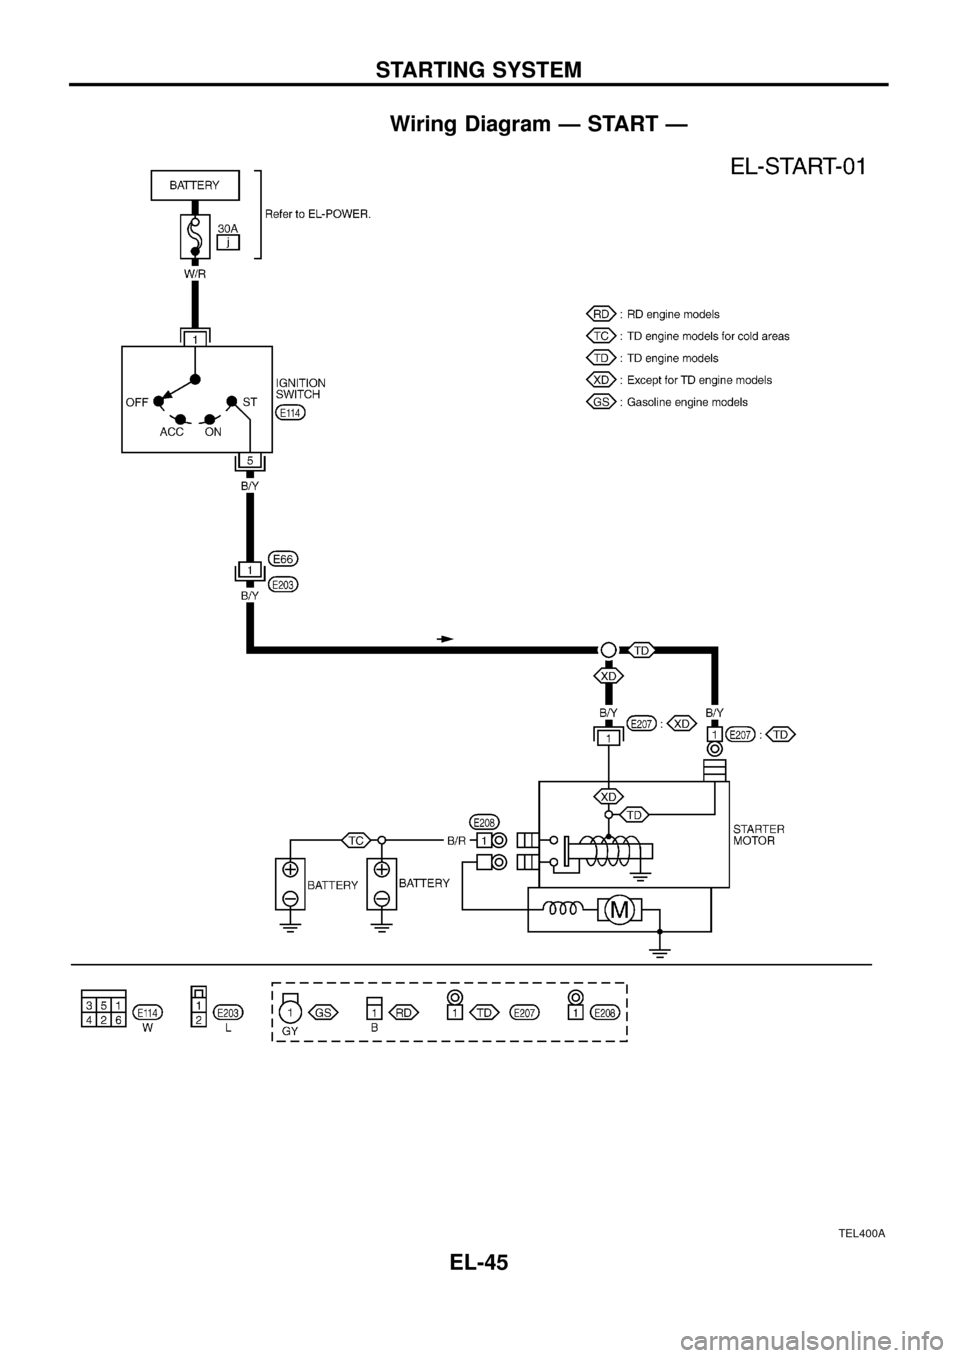 NISSAN PATROL 1998 Y61 / 5.G Electrical System User Guide Wiring Diagram Ð START Ð
TEL400A
STARTING SYSTEM
EL-45 